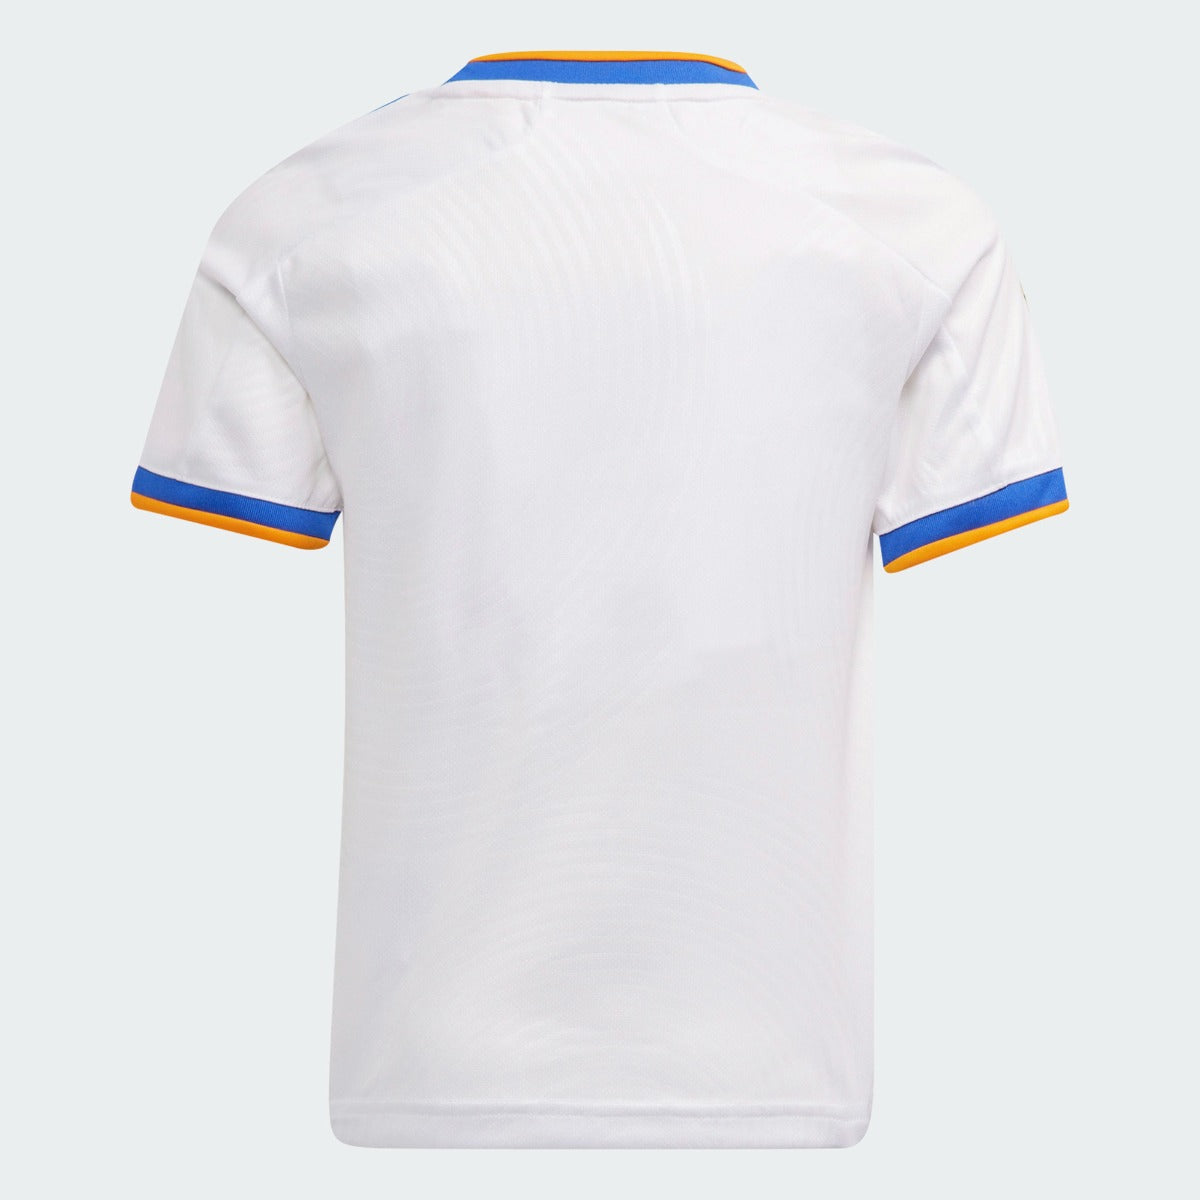 Adidas 2021-22 Real Madrid Home MINI Kit - White-Blue-Orange (Jersey - Back)